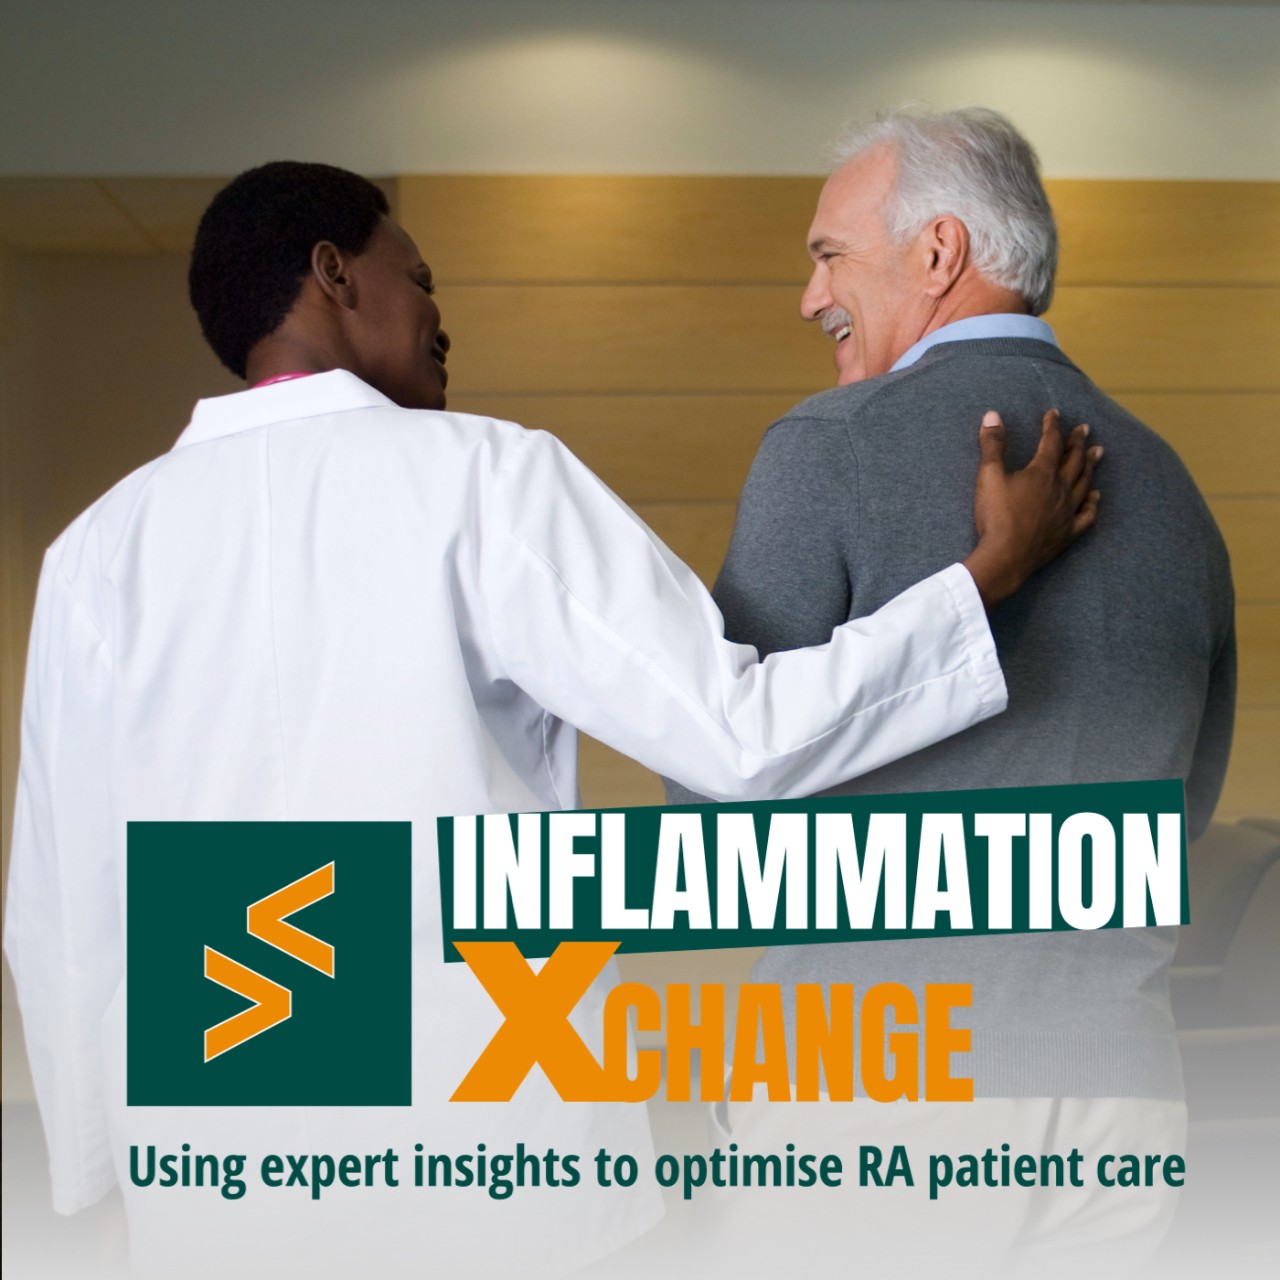 inflammation exchange